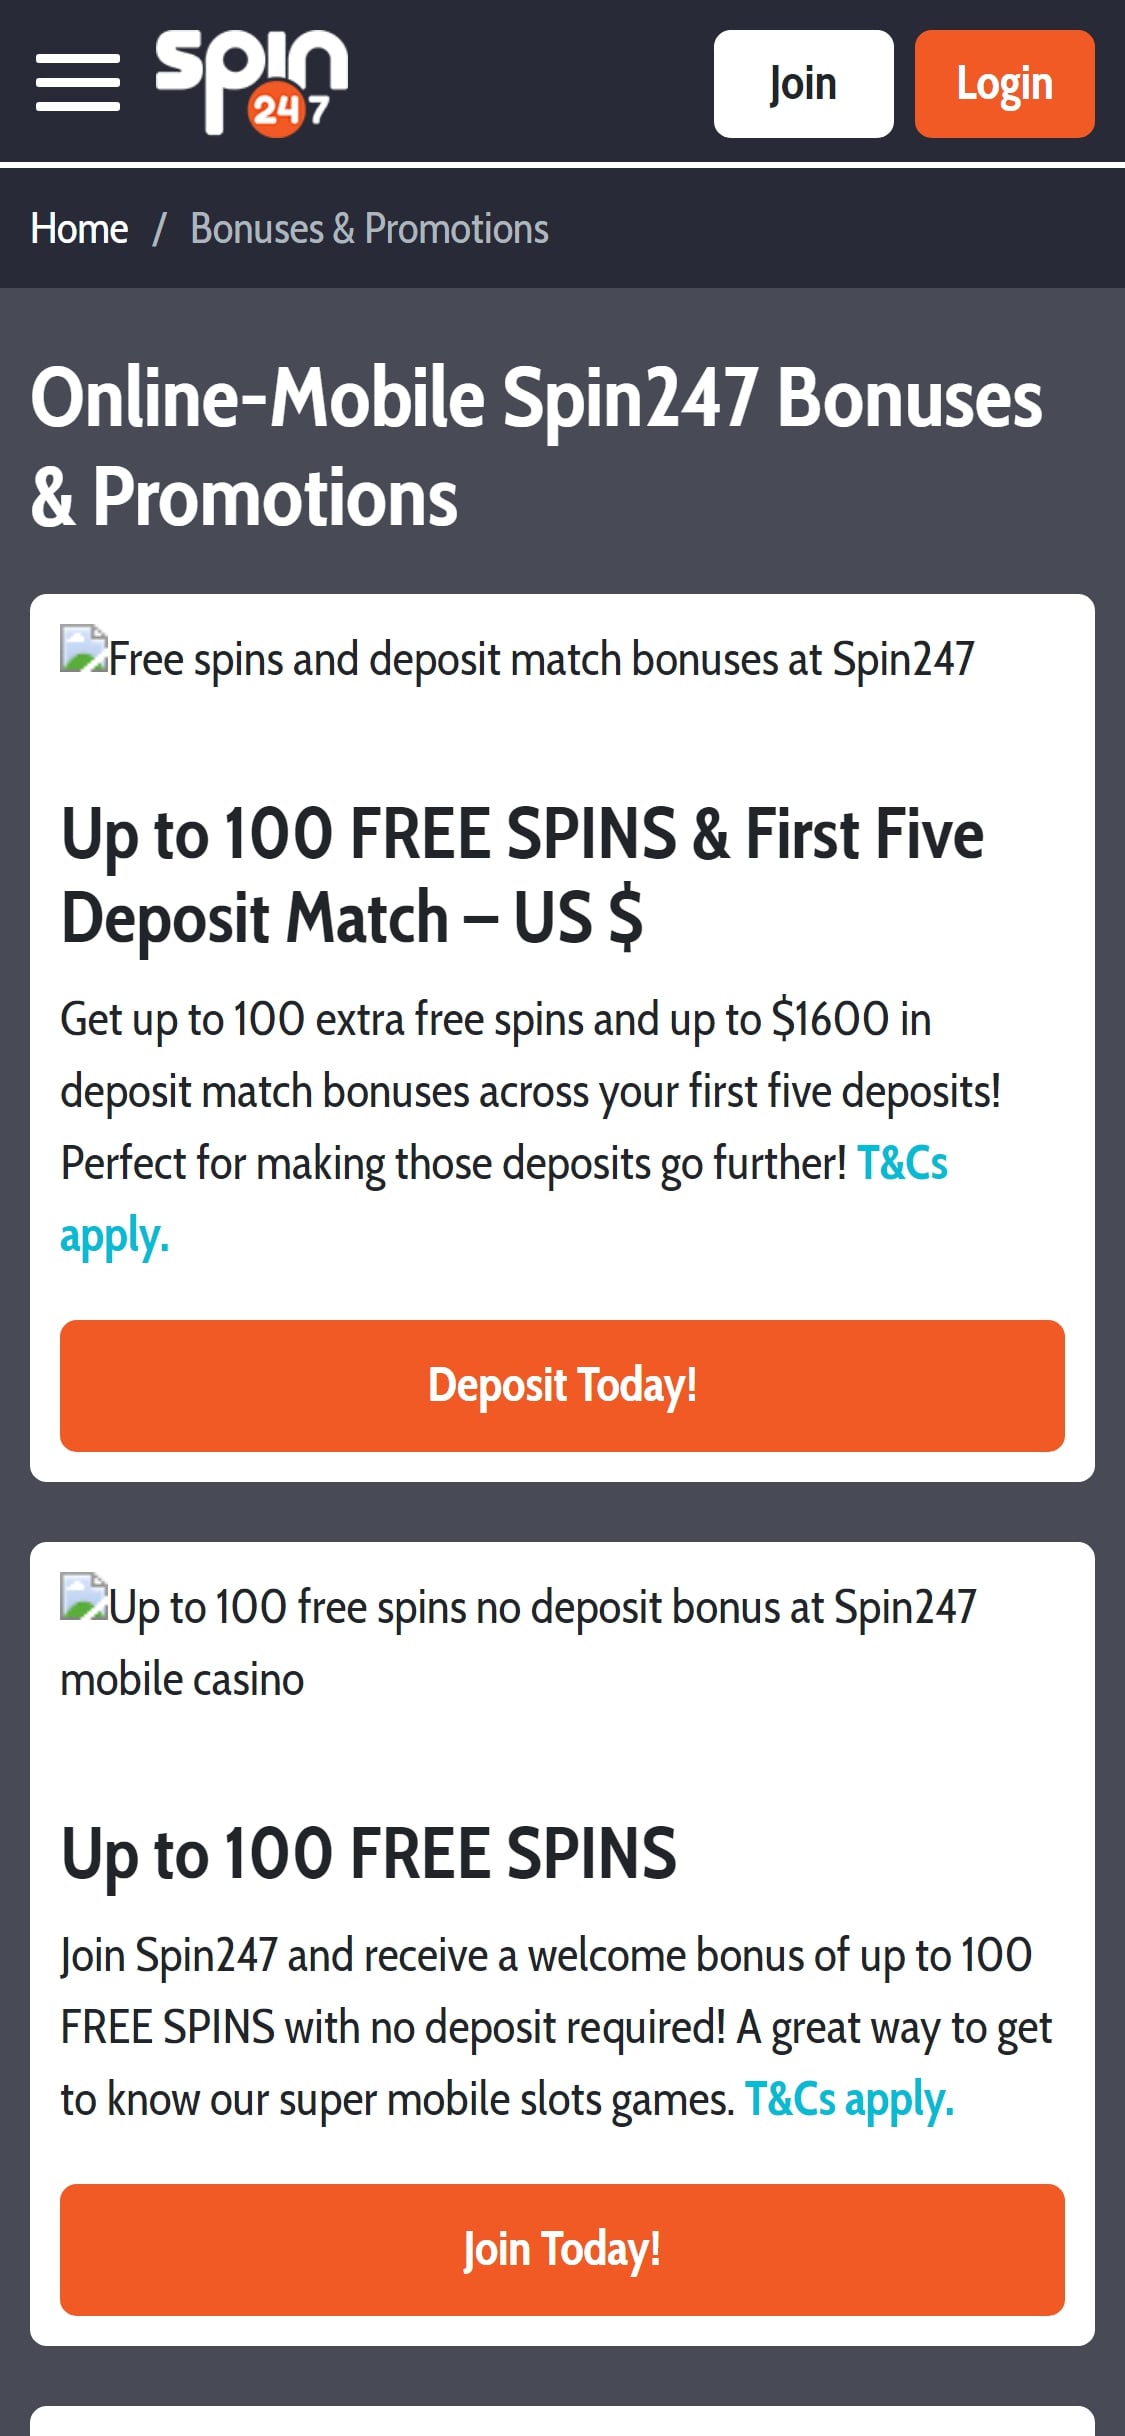 Spin247 Casino Mobile No Deposit Bonus Review